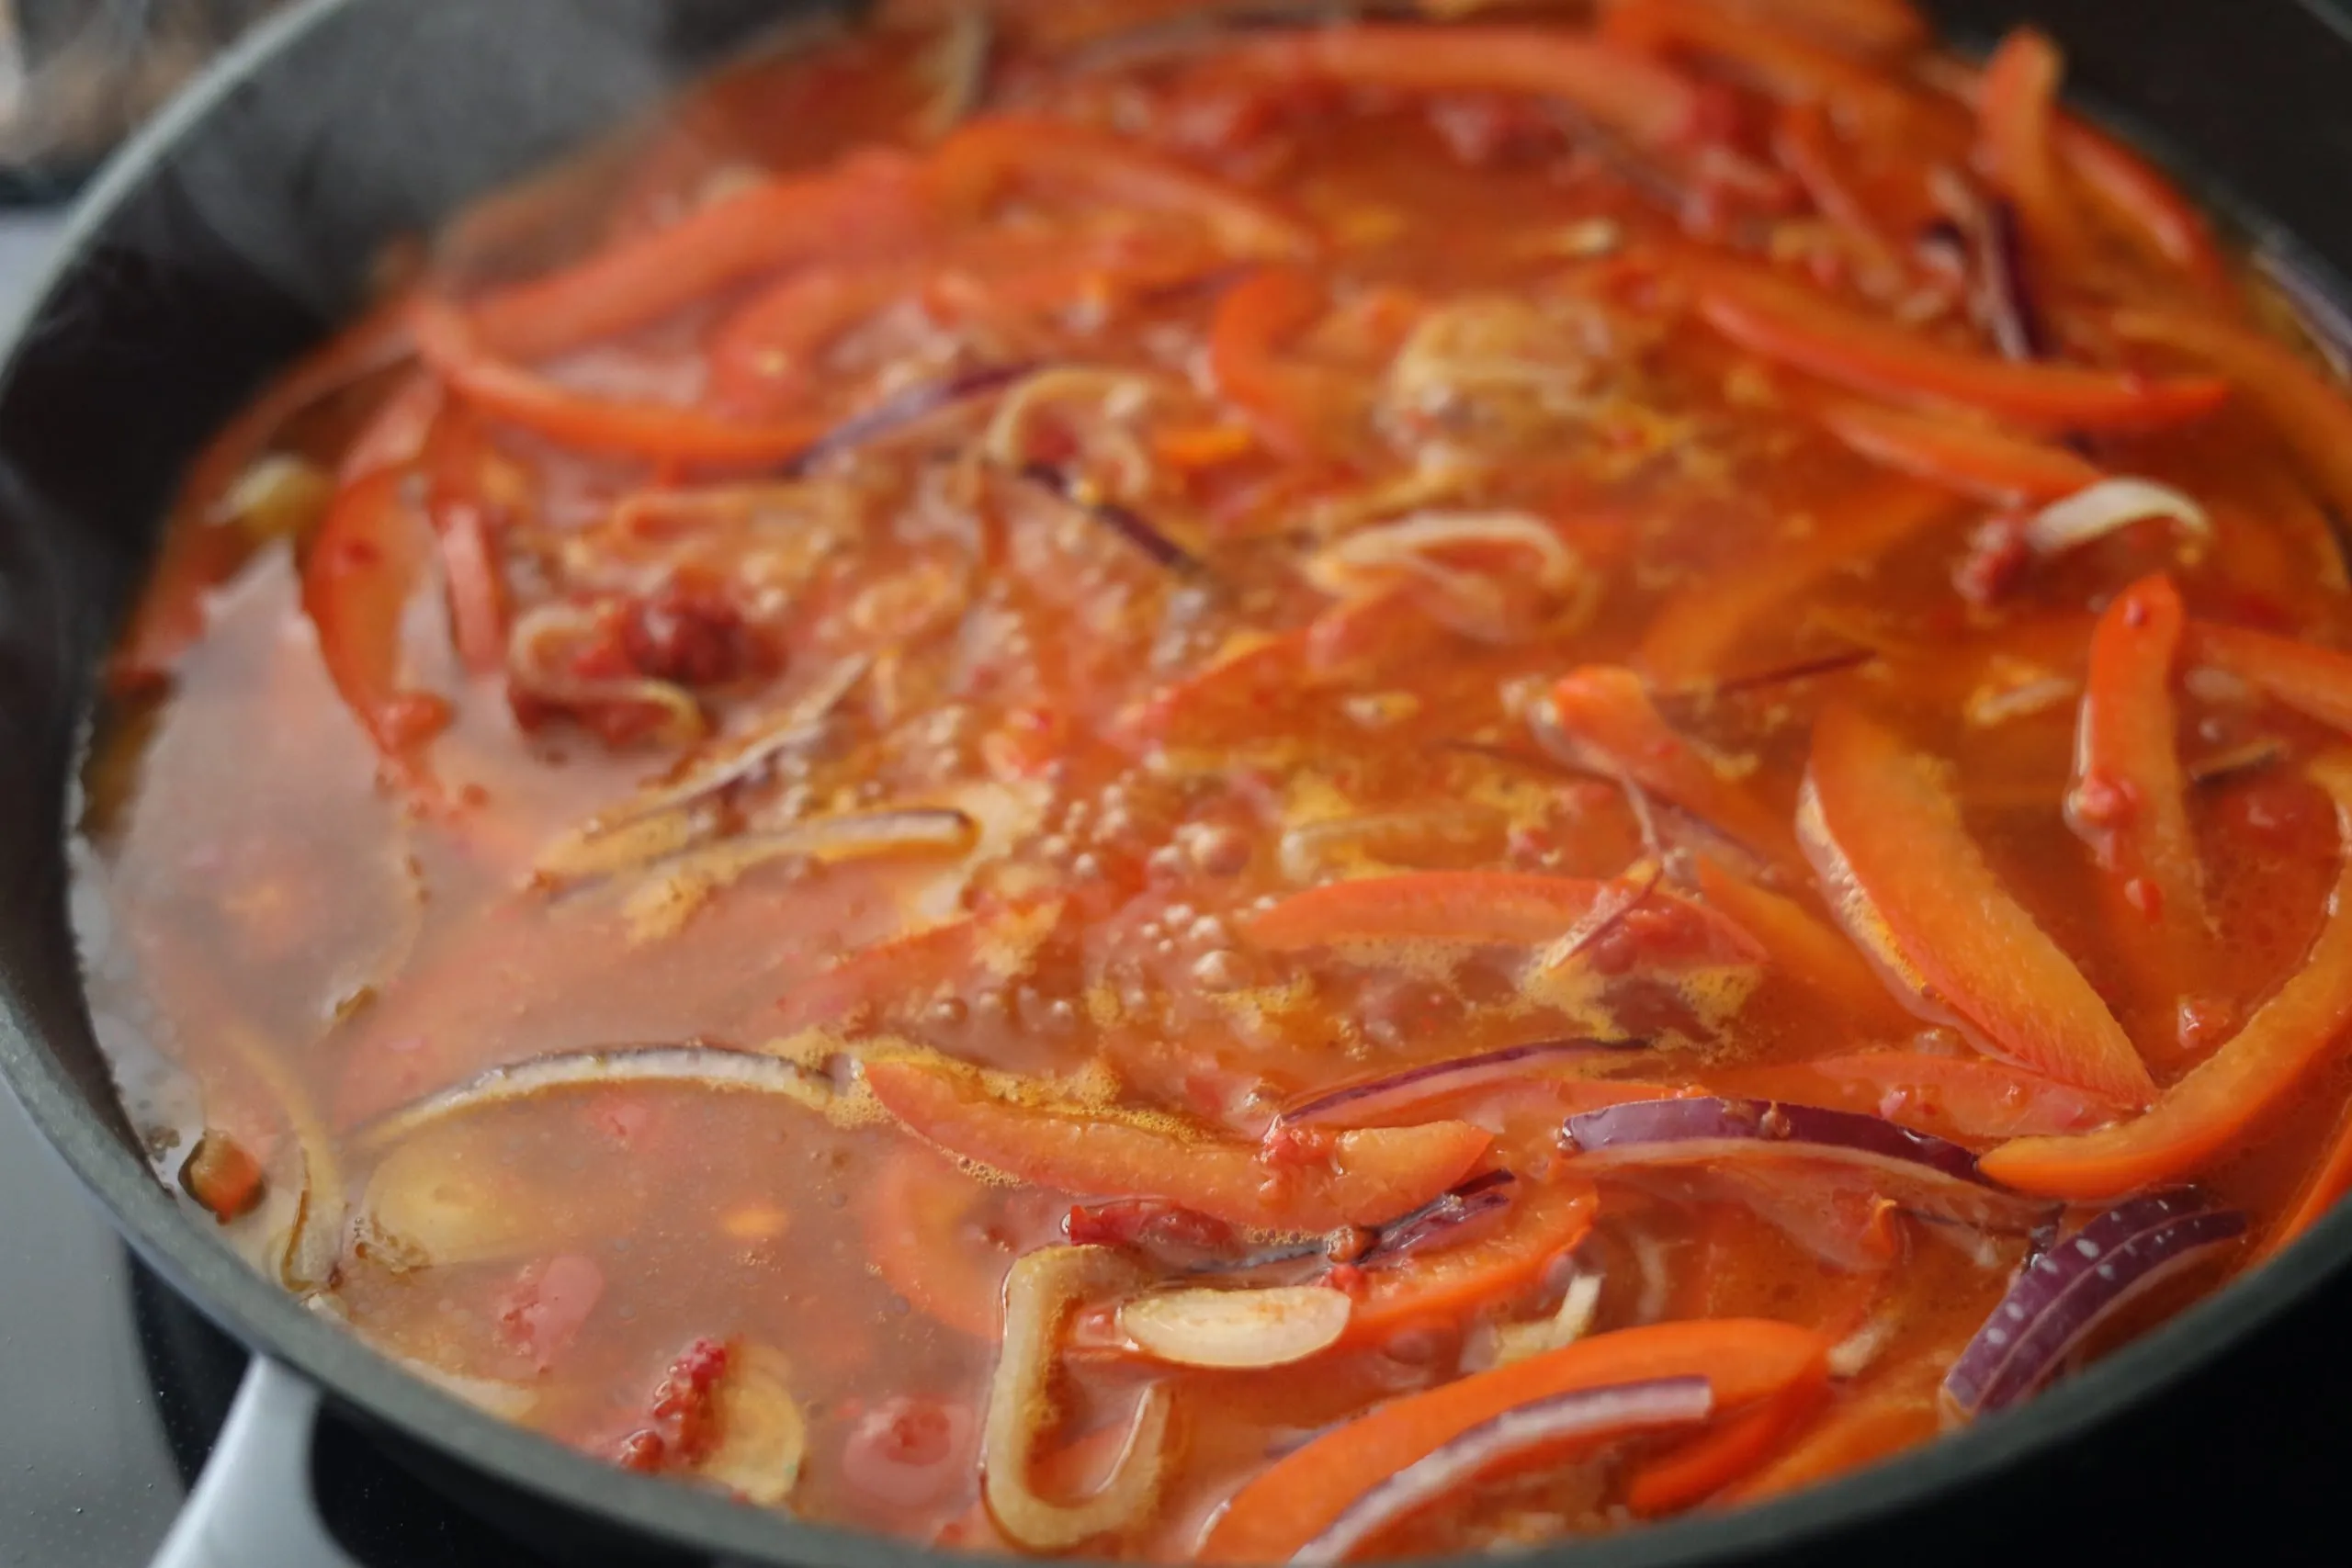 Piperade sauce in a pan